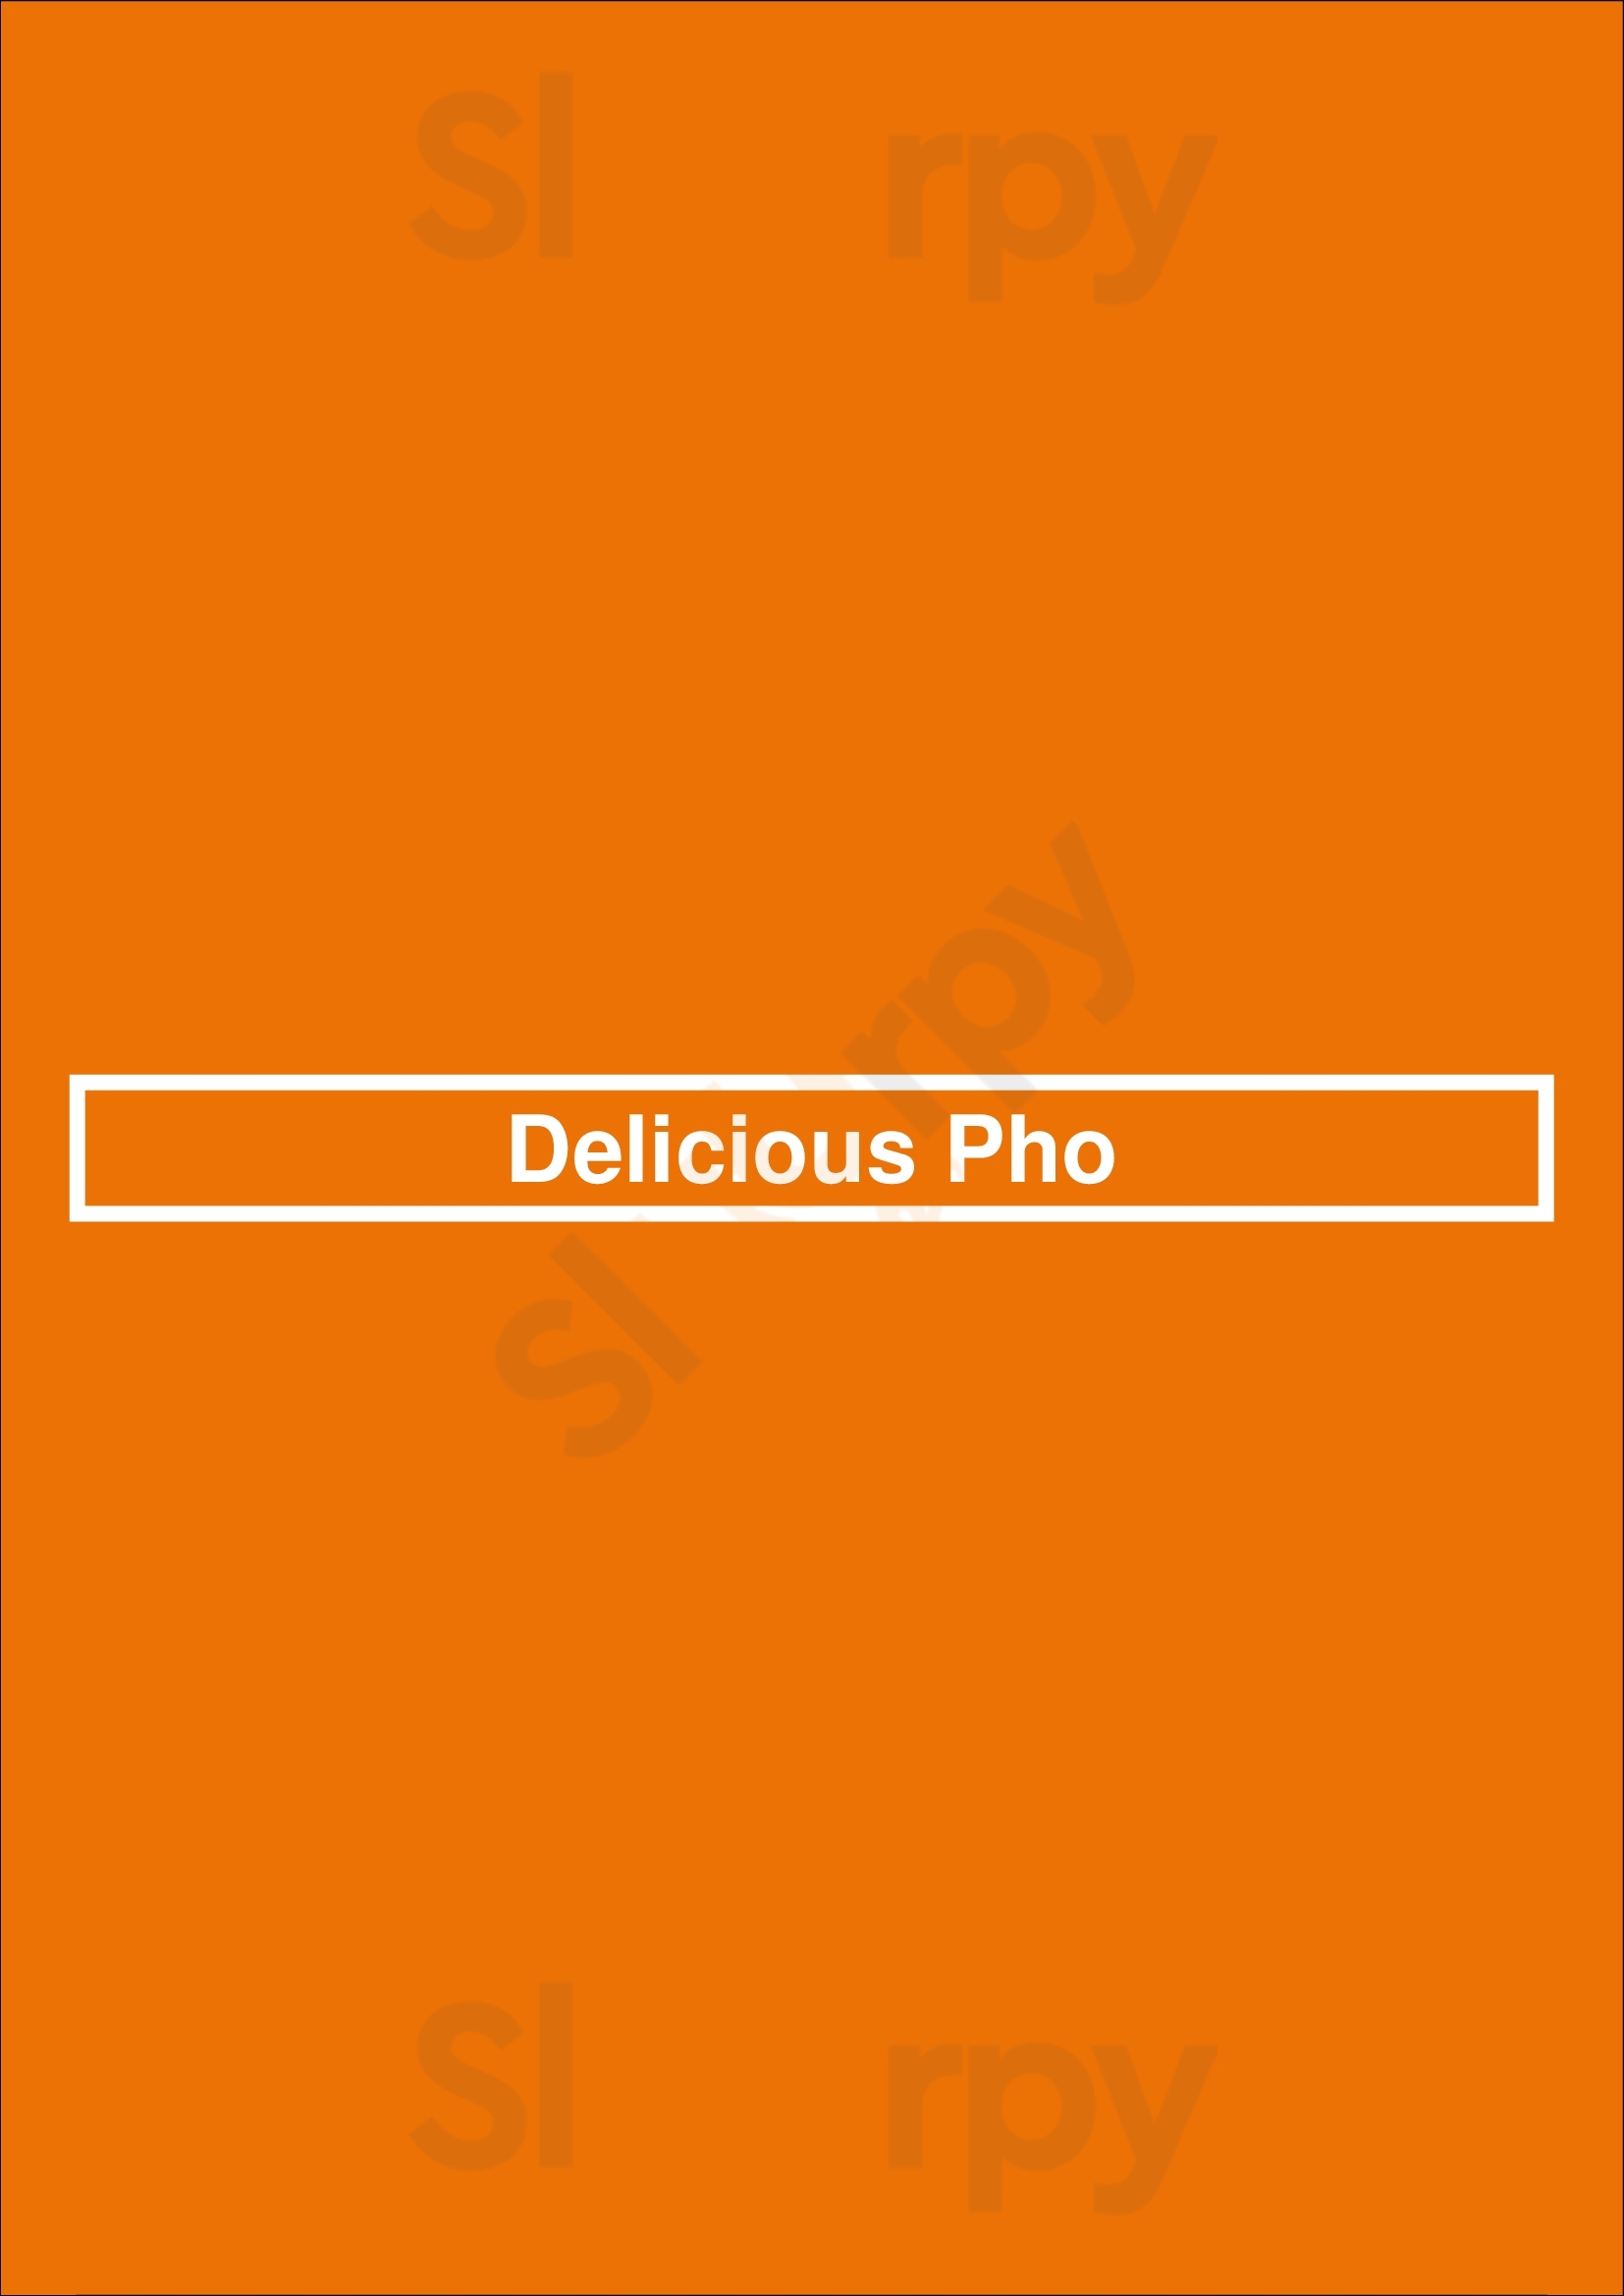 Delicious Pho Sherwood Park Menu - 1